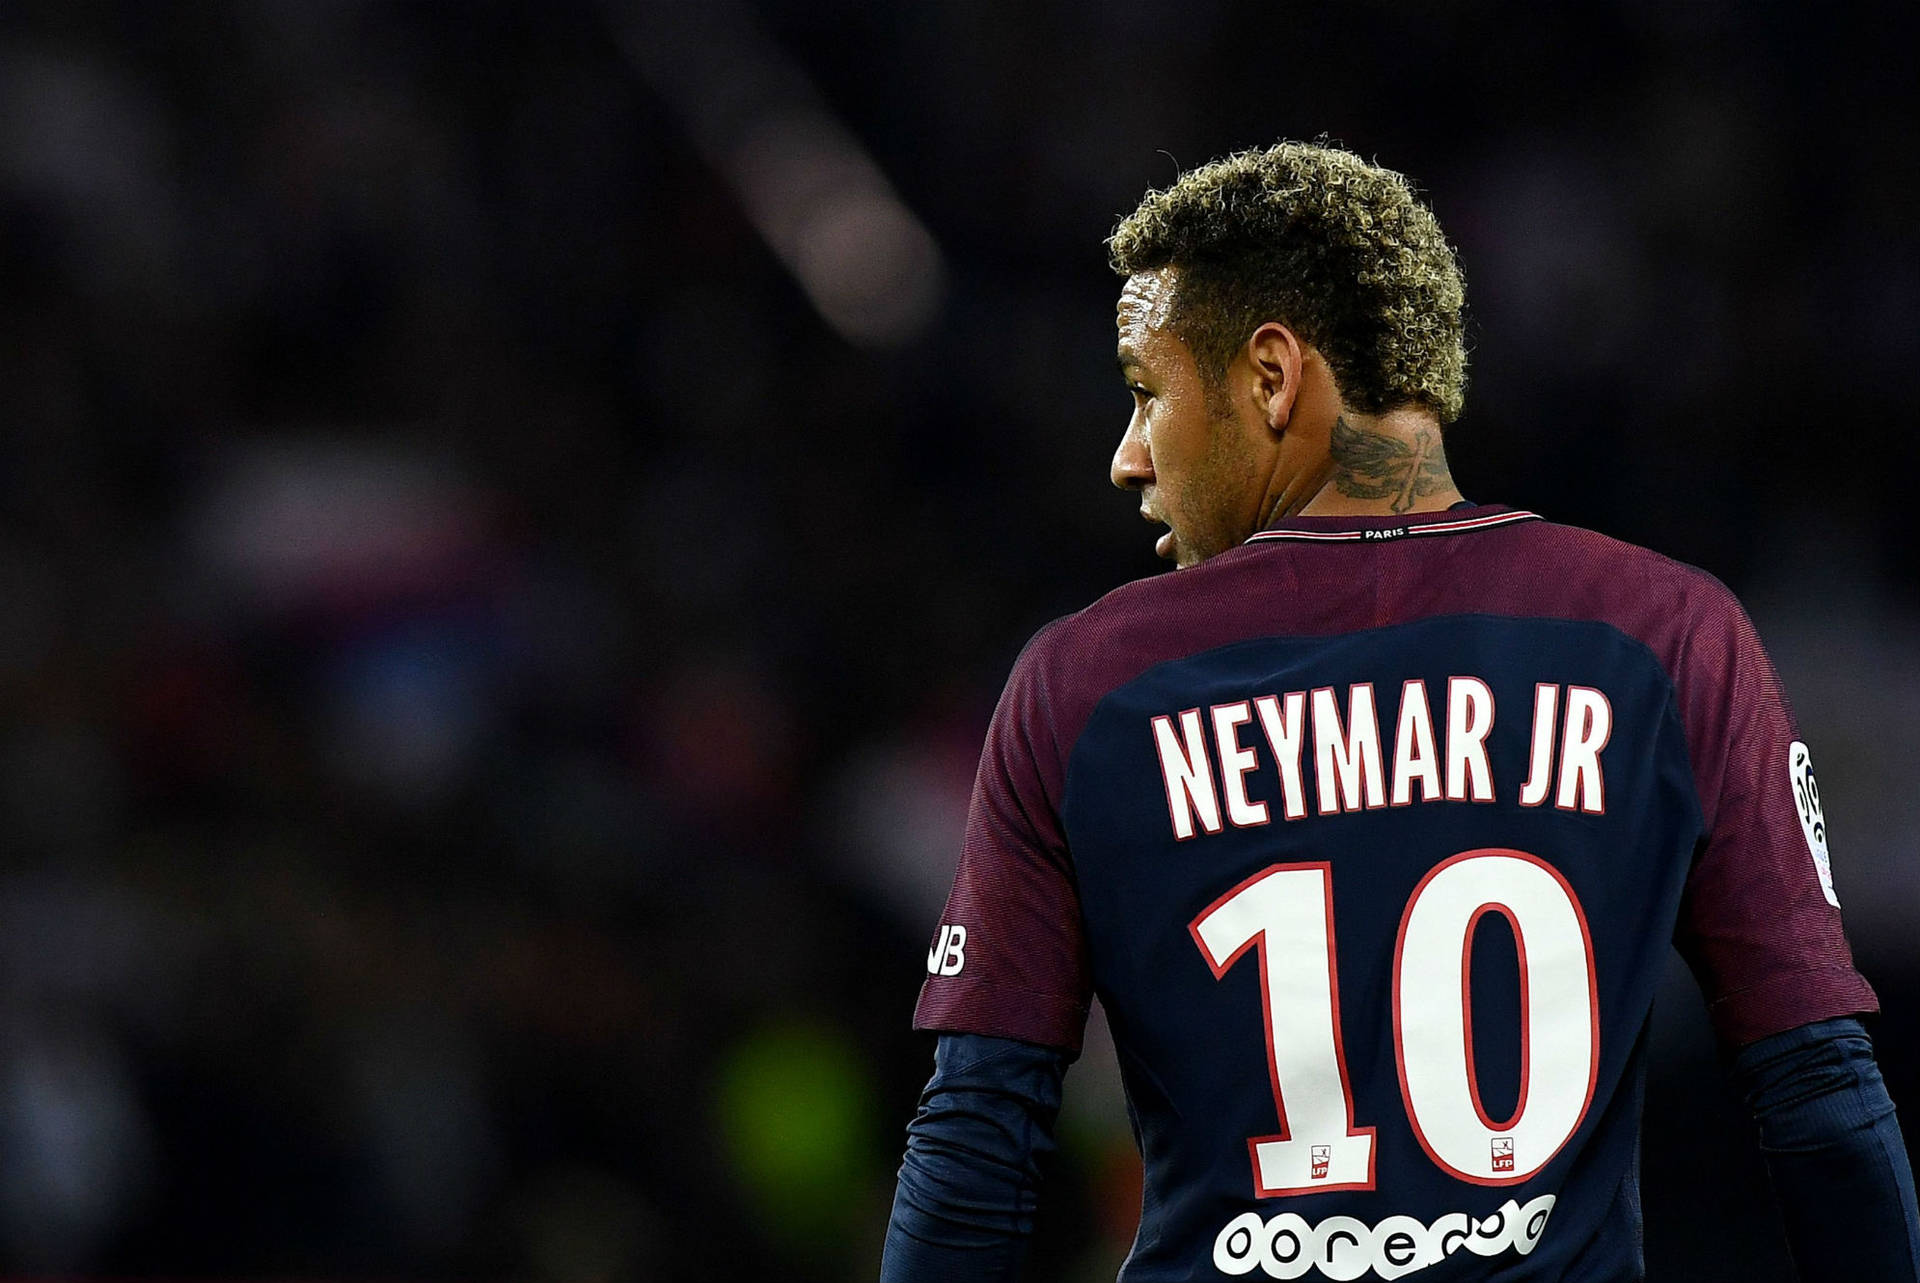 Neymar Jr Number 10 Jersey Background